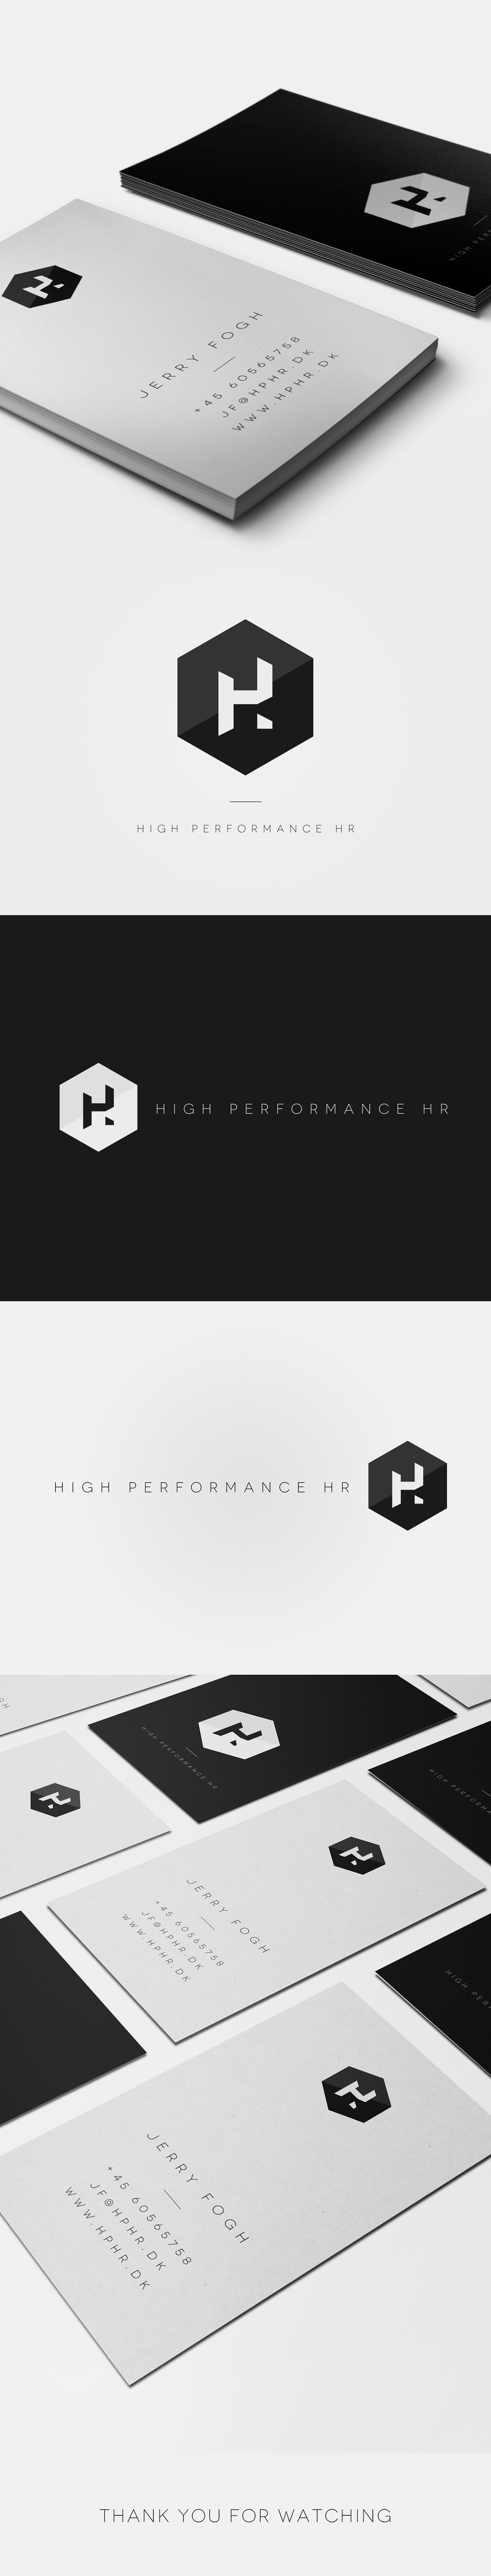 Logo Design visual identity color palette Business card design High Performance HR